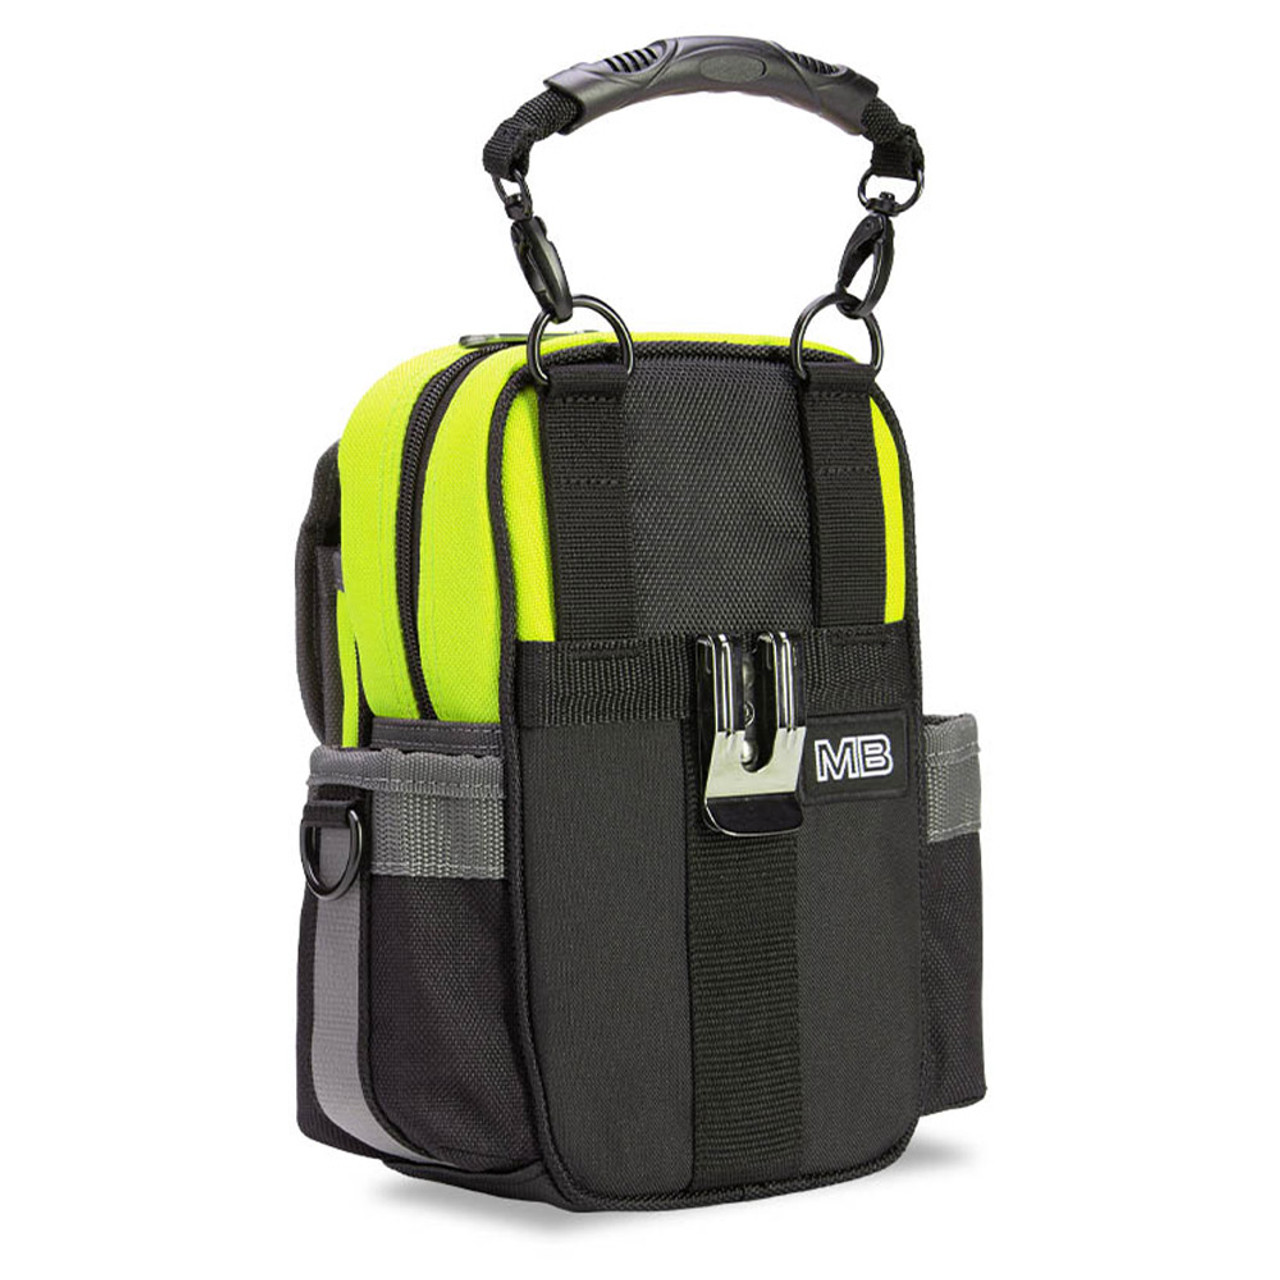 Veto Pro Pac MB HI-VIZ Yellow Compact Meter Bag / Tool Pouch